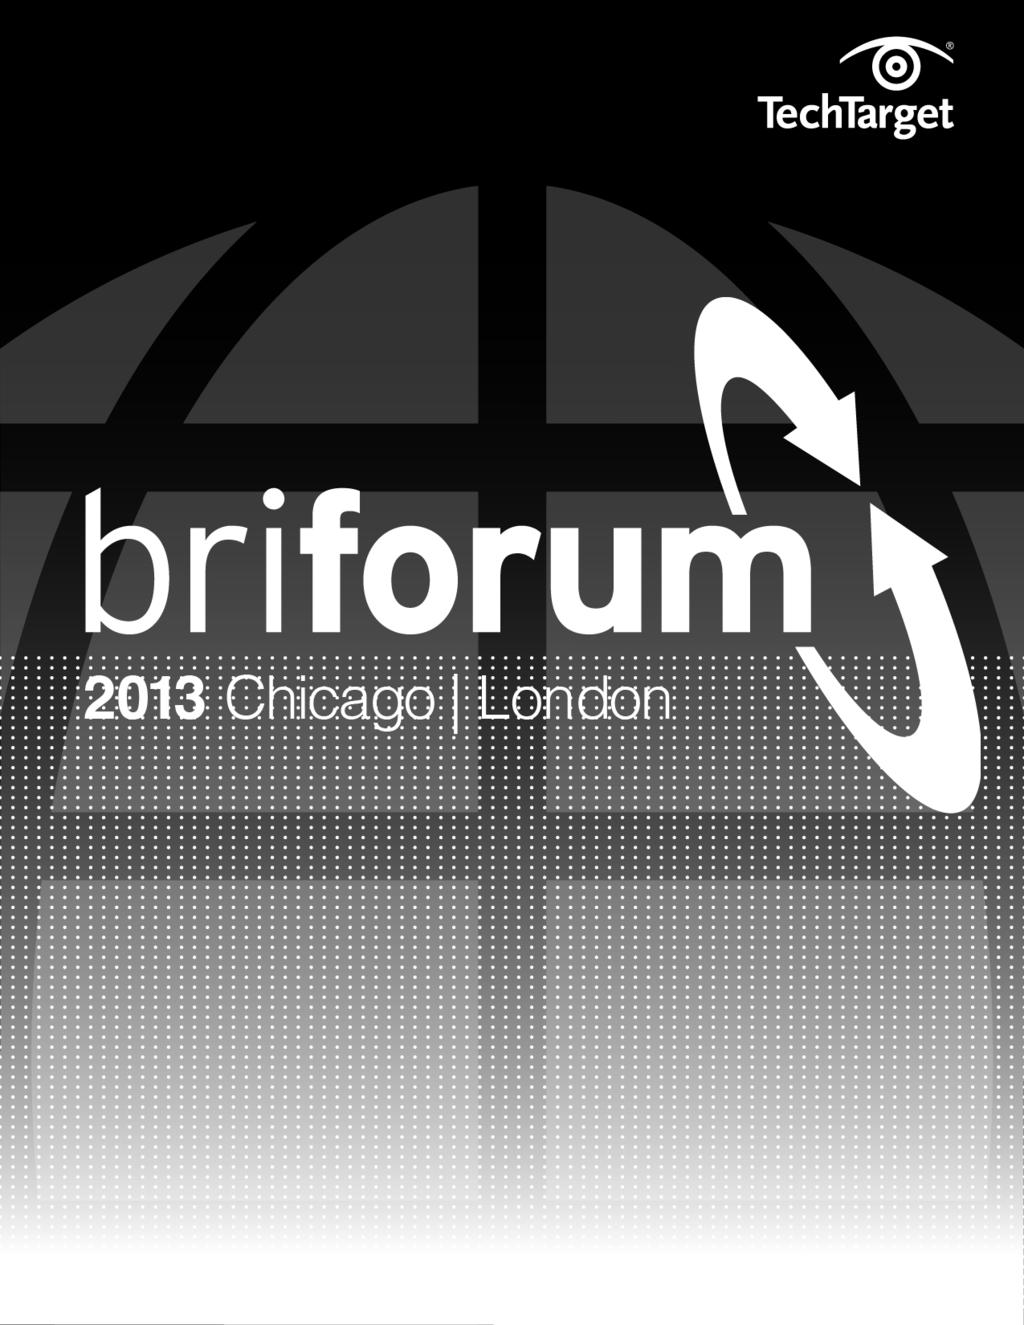 BriForum 2013 Sponsorship